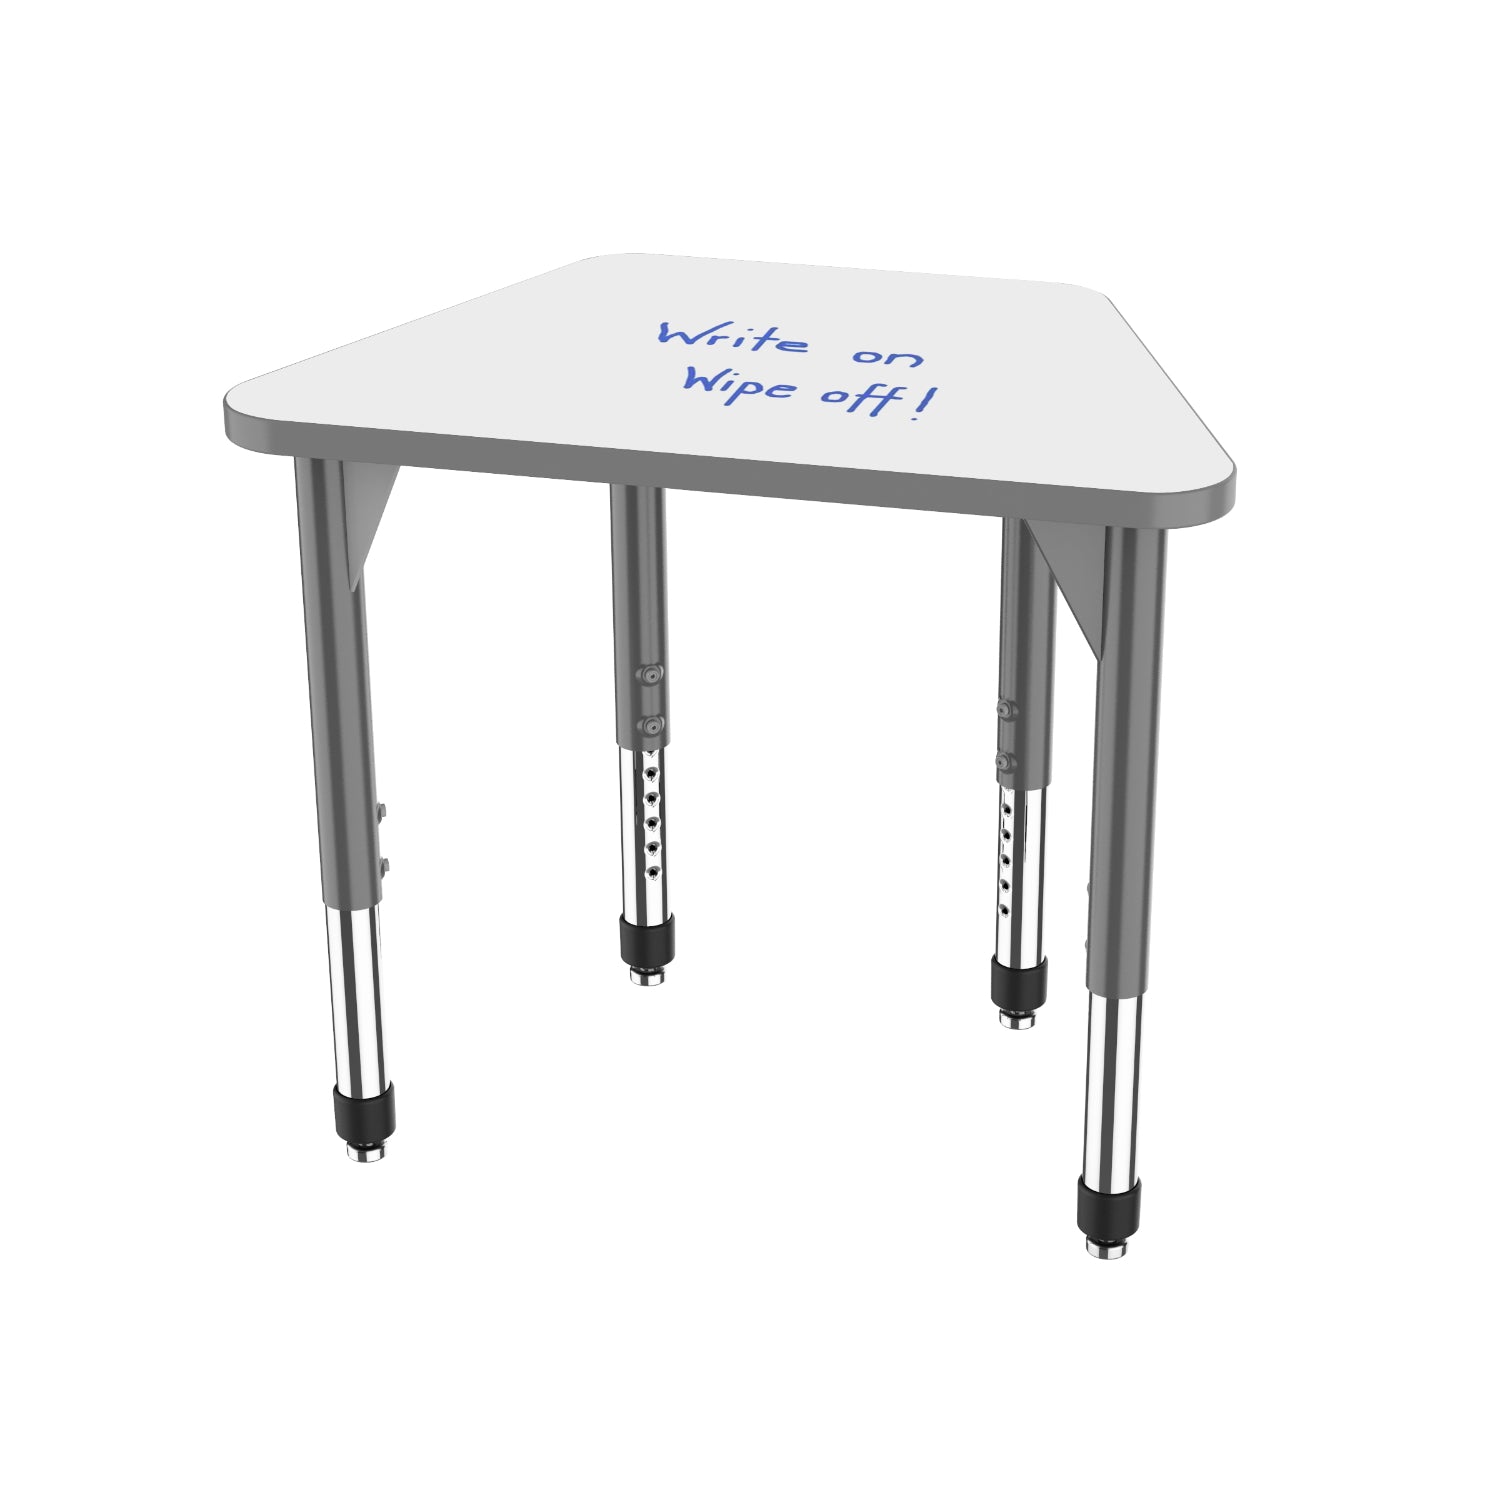 Premier White Dry-Erase Standing Height Collaborative Desk, 20" x 31" Trapezoid